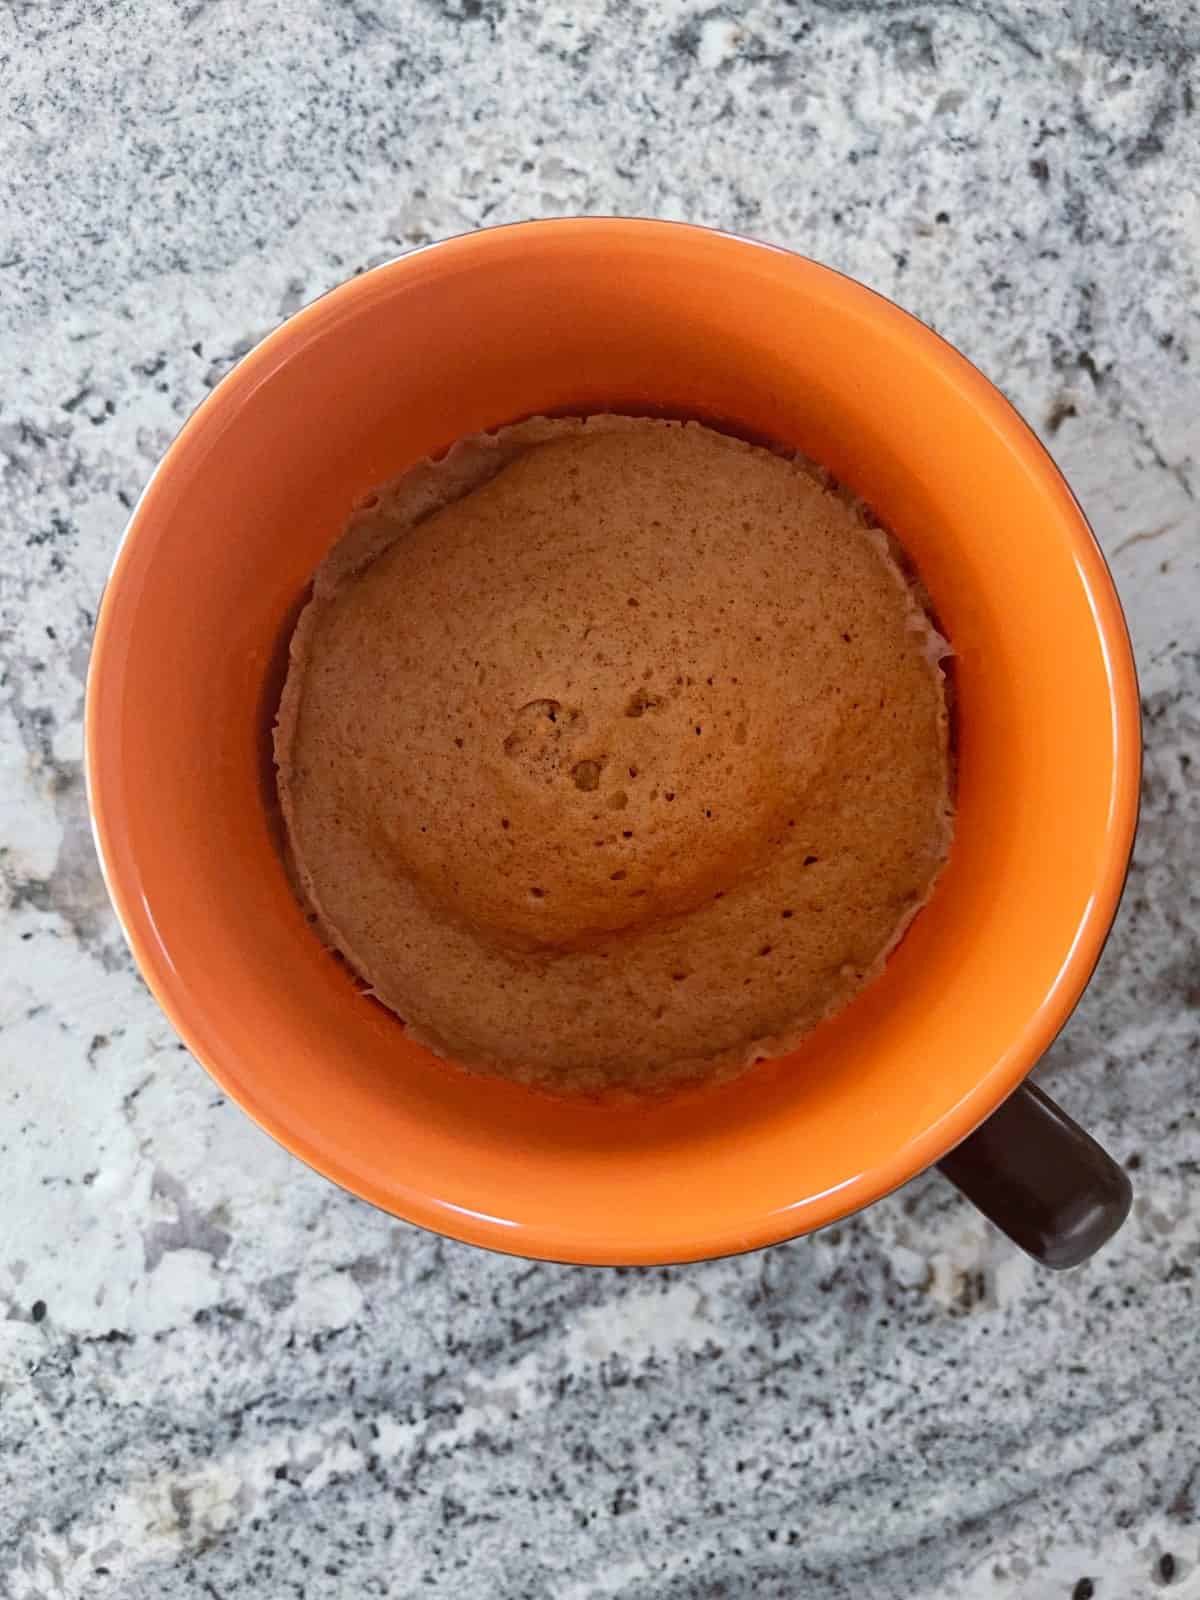 Microwave gingerbread in orange mug on granite counter.